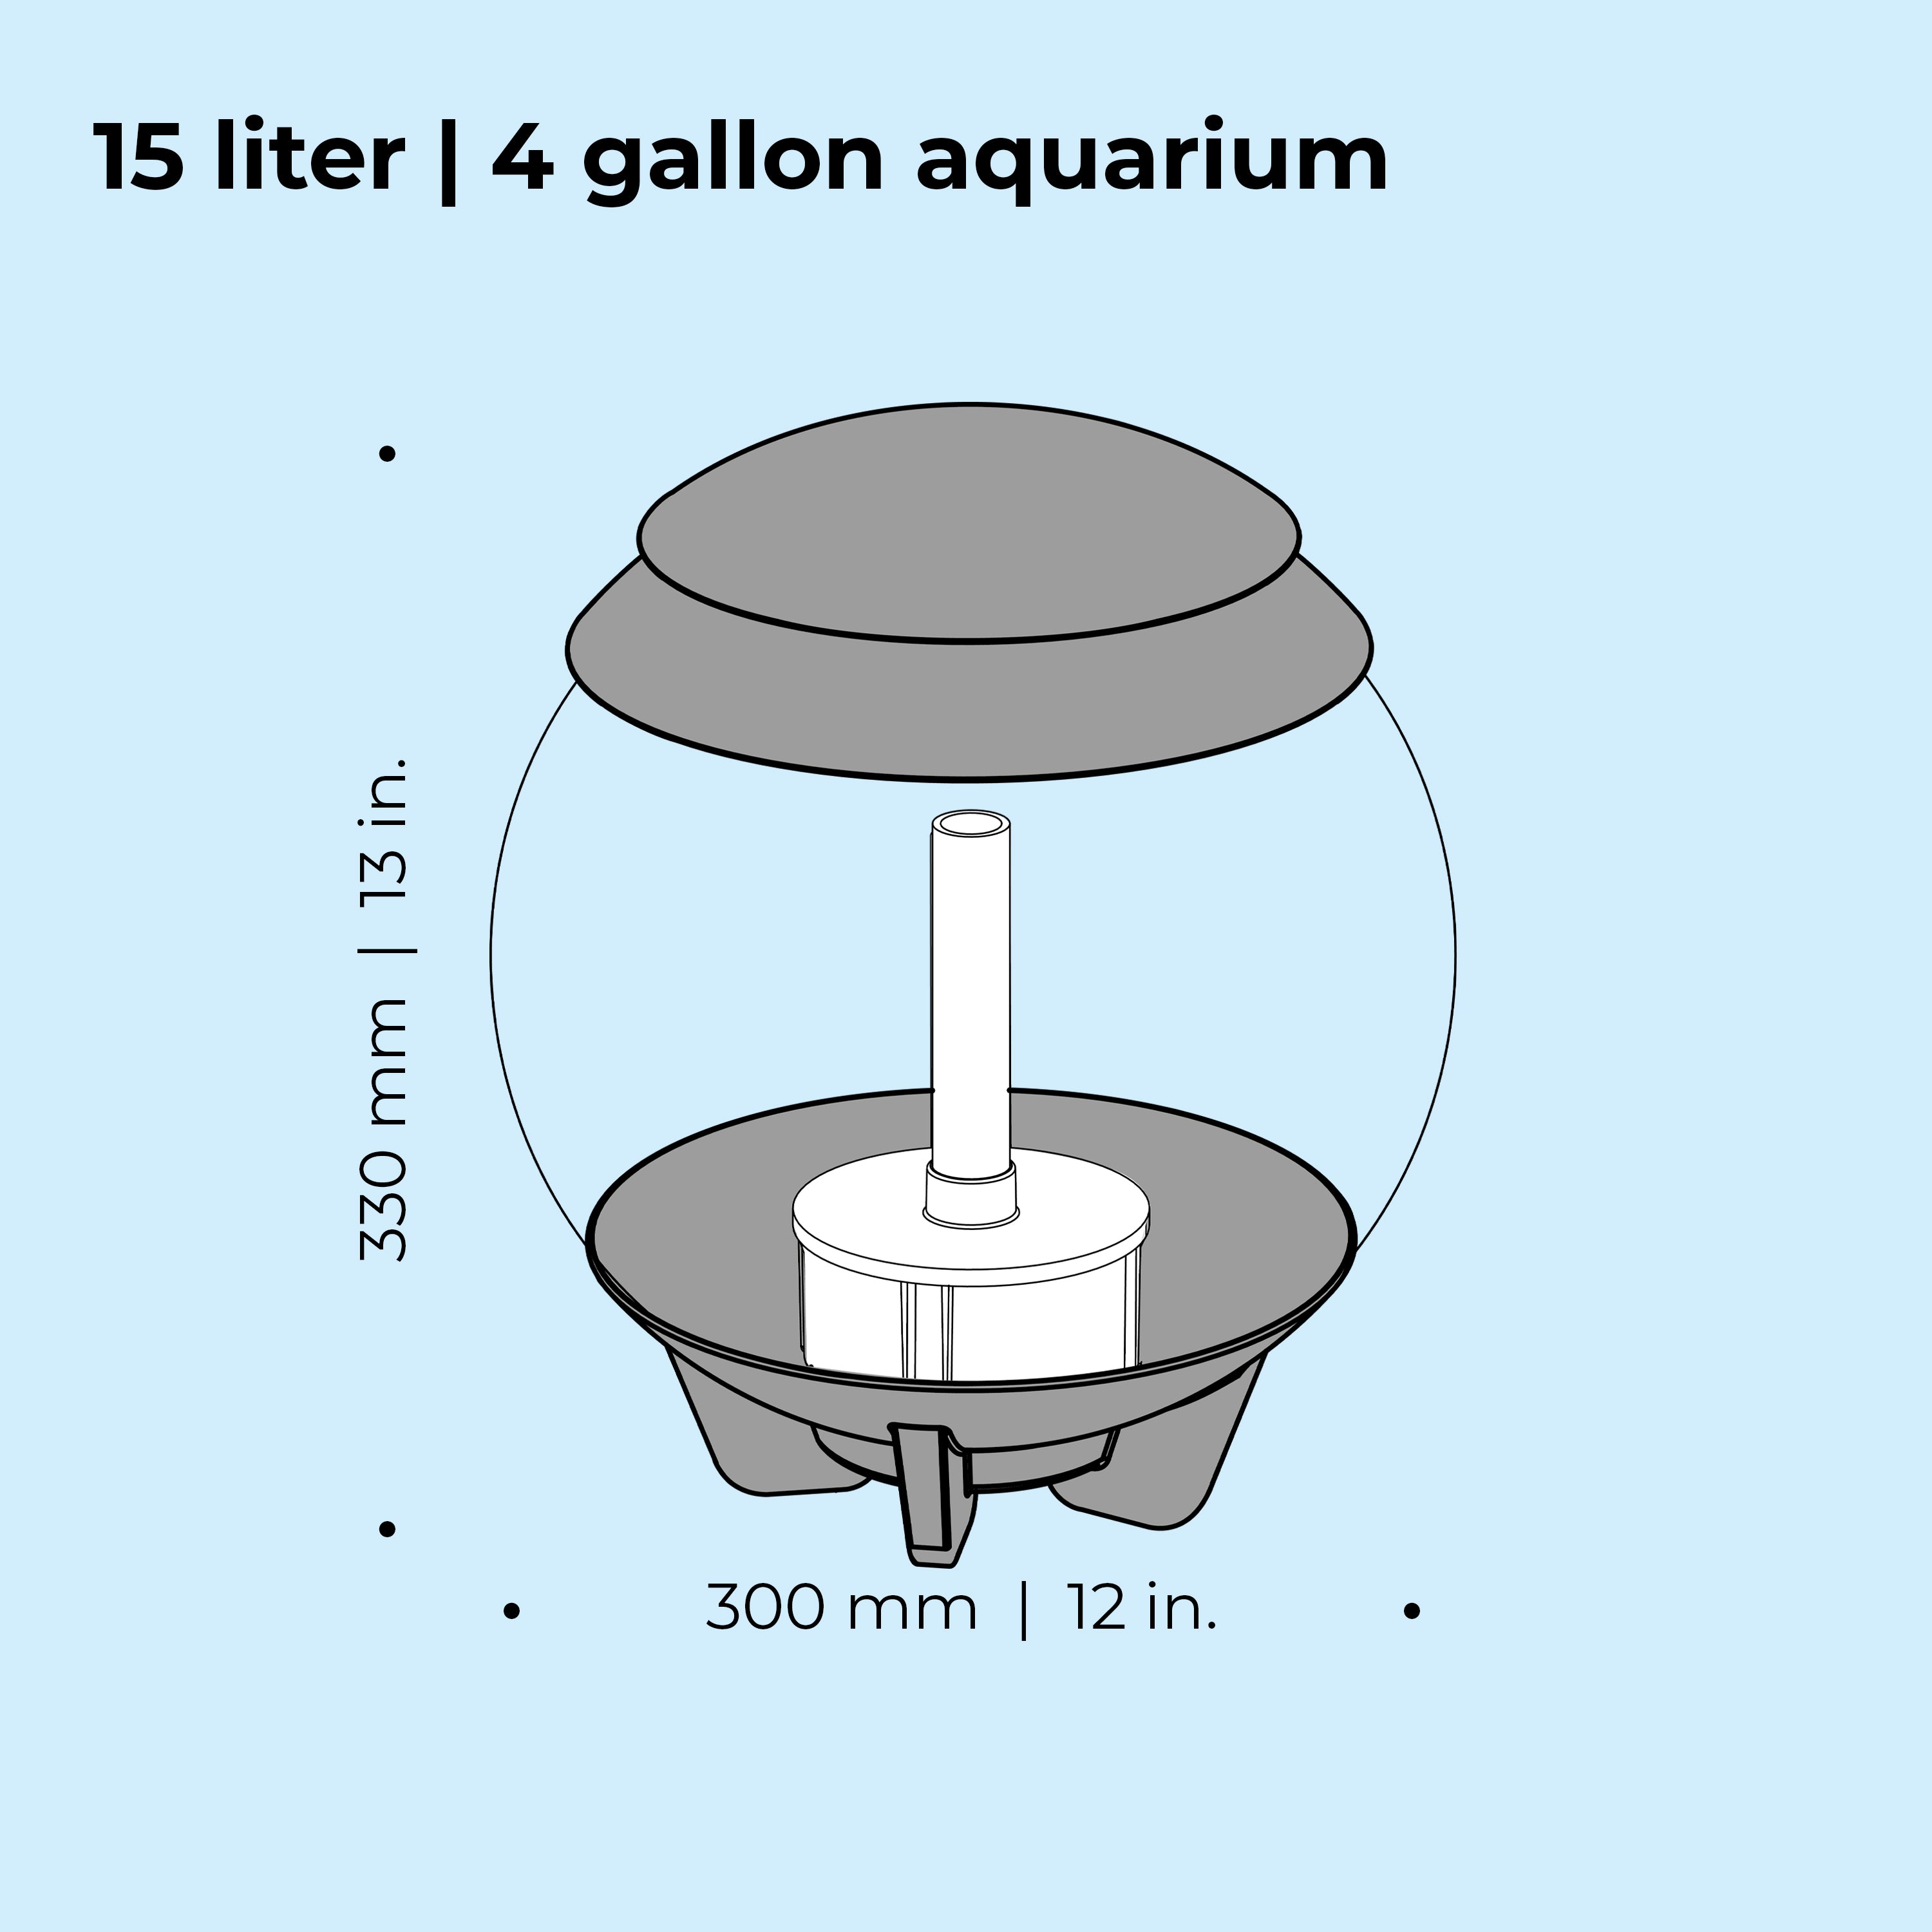 HALO 15 Aquarium with MCR Light - 4 gallon, 15 liter dimension chart